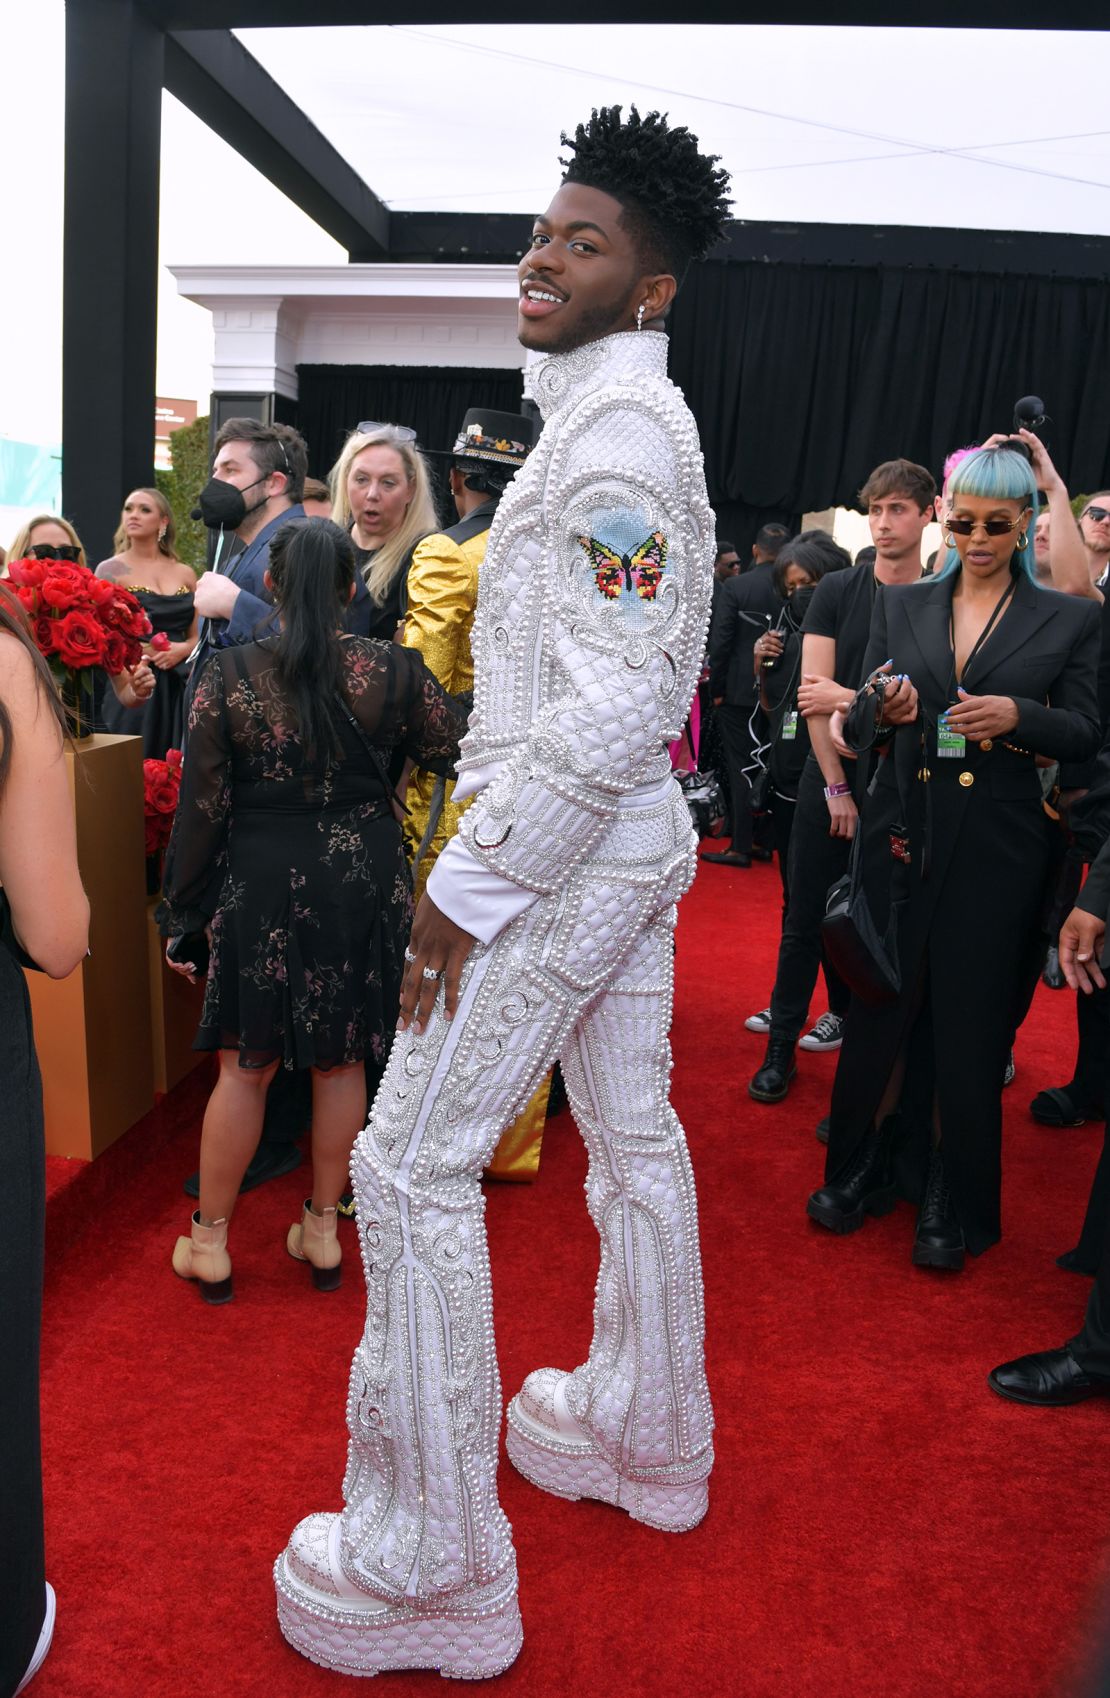 Grammy Awards 2022: Best fashion on the red carpet | CNN